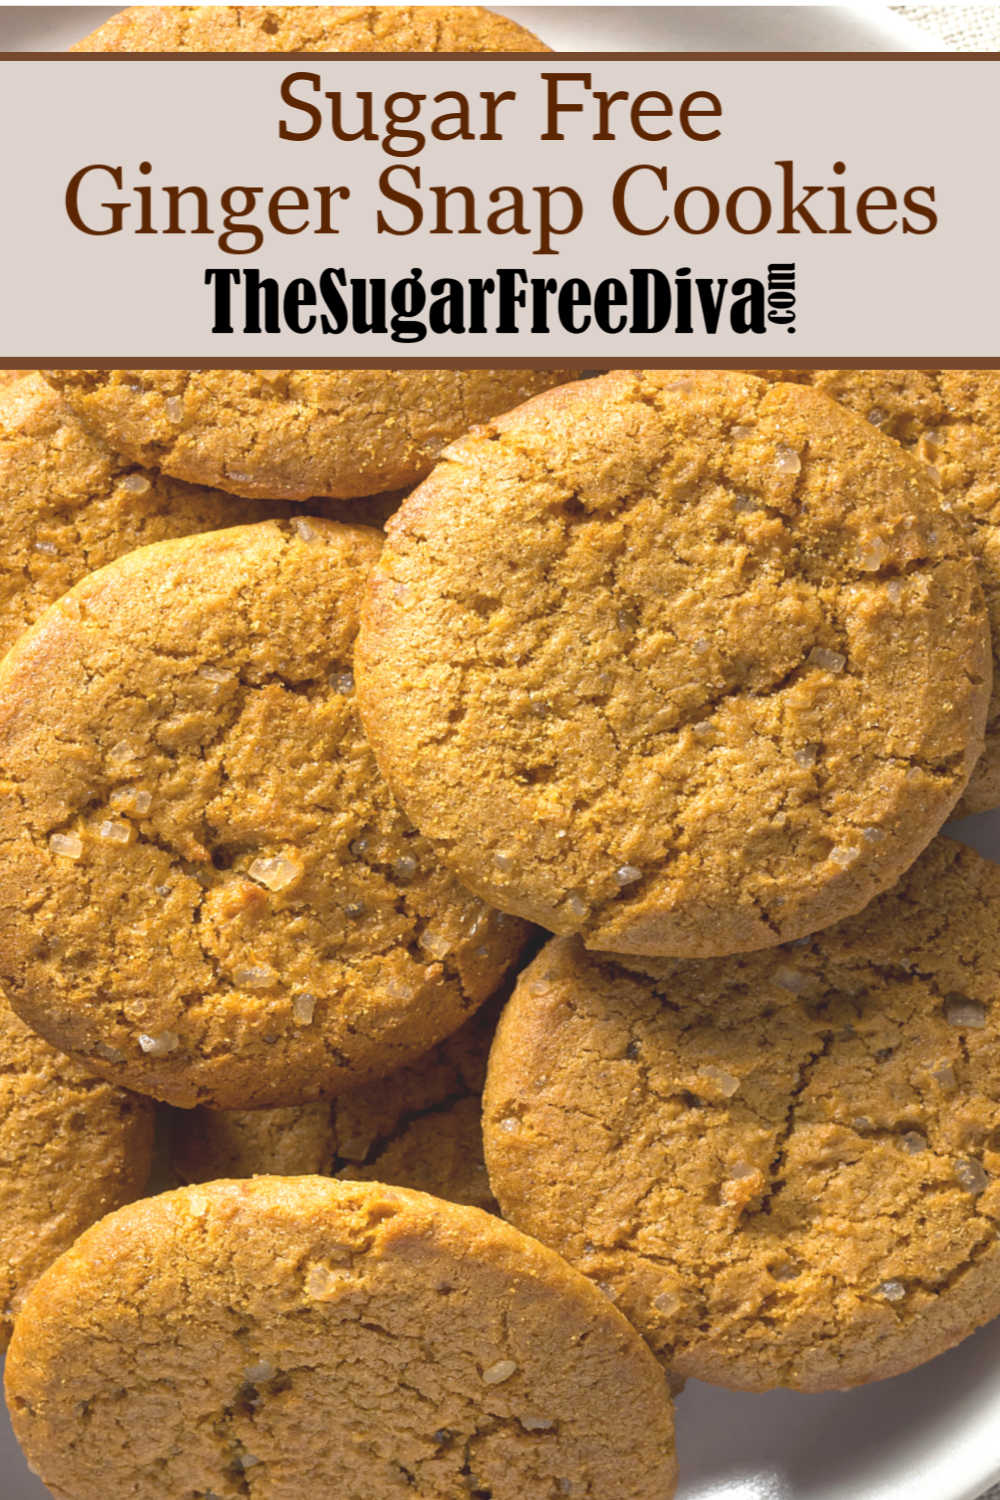 Sugar Free Ginger Snap Cookies